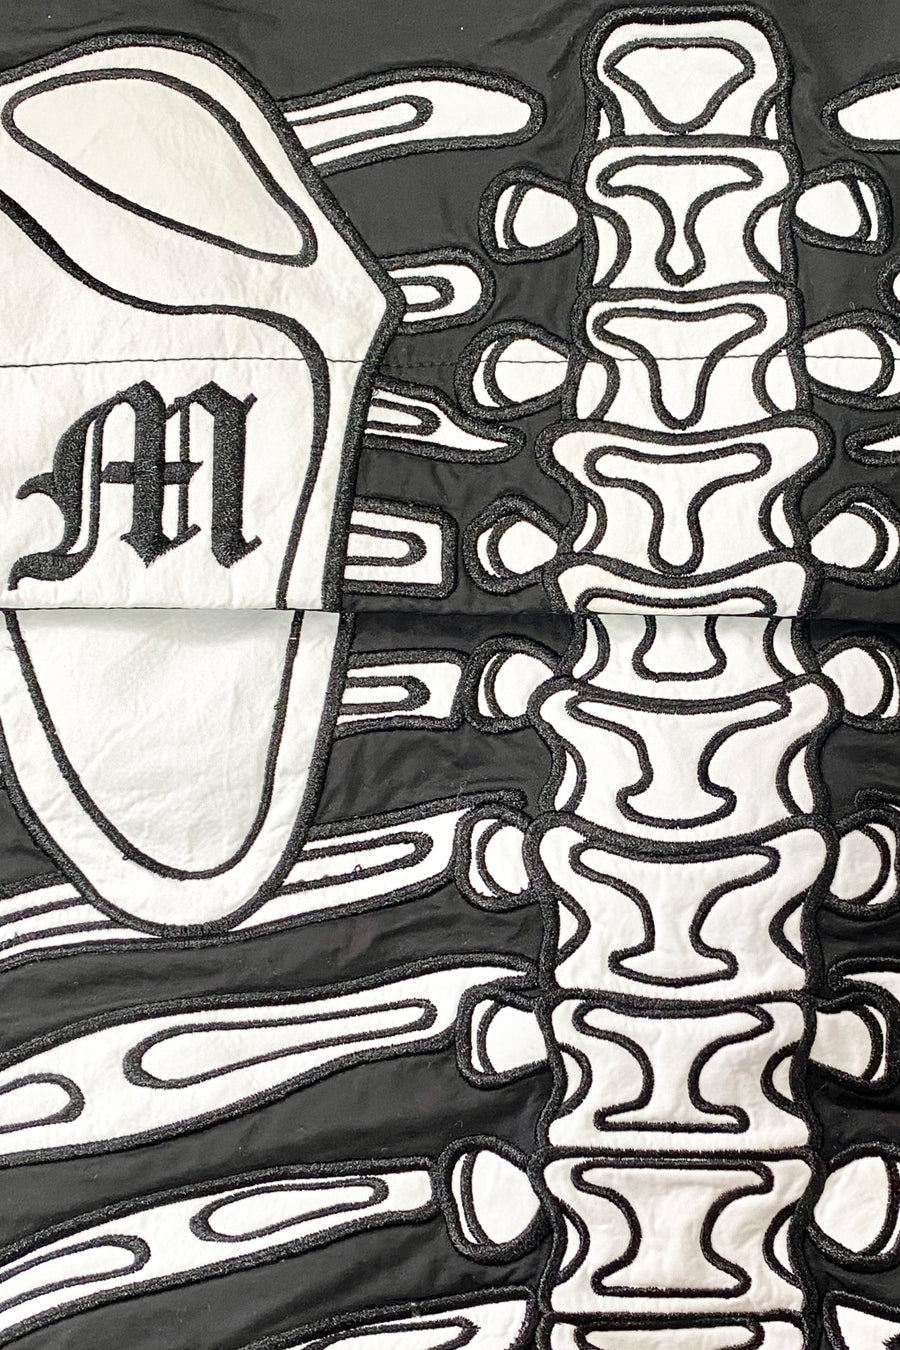 MAYO アノラック ブラック BONE embroidery anorak